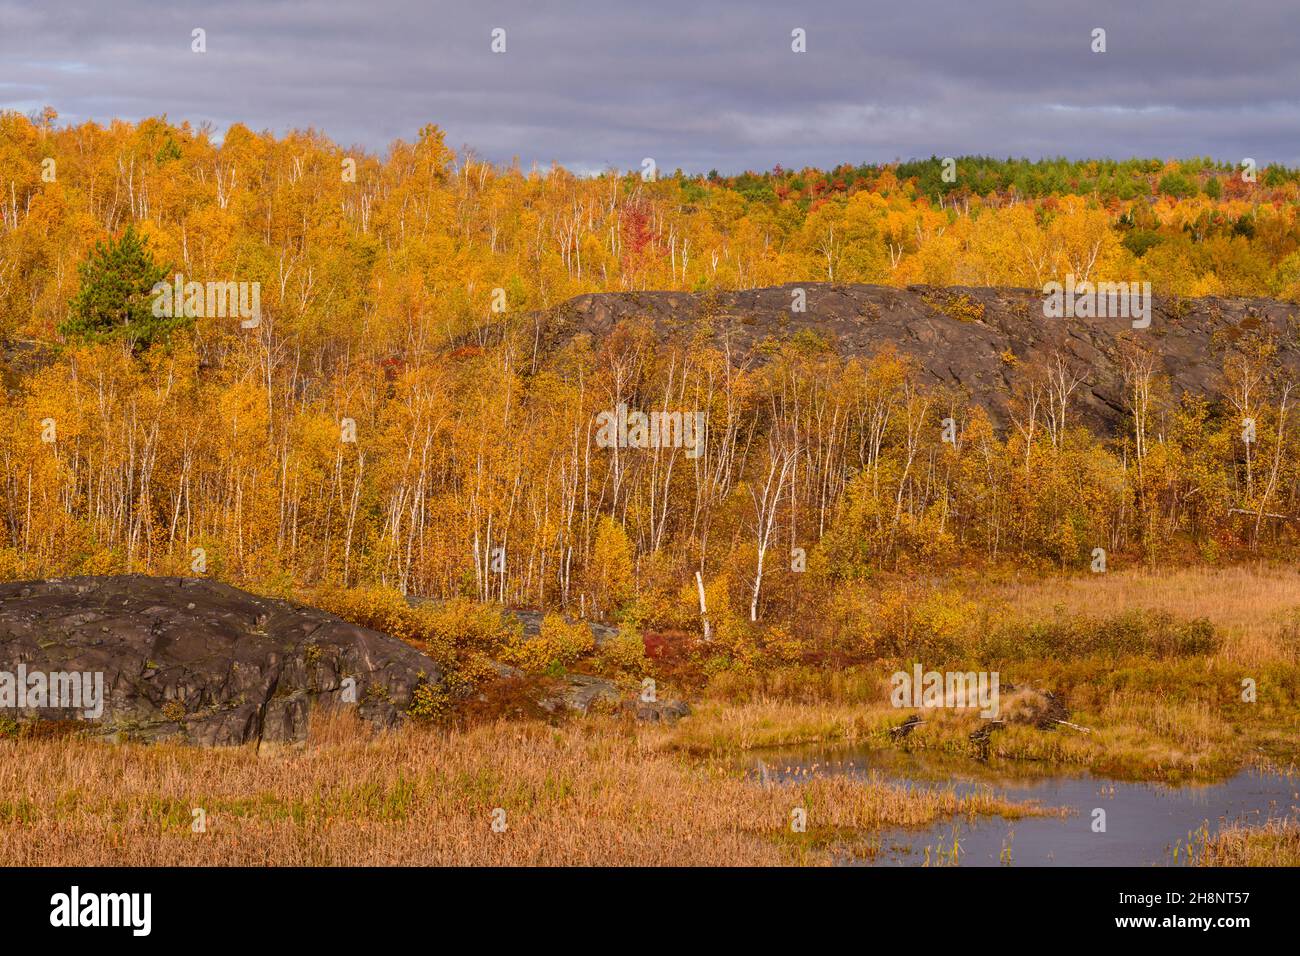 Biodiversity in the Sudbury Basin- Autumn trees and wetlands, Greater Sudbury, Ontario, Canada Stock Photo